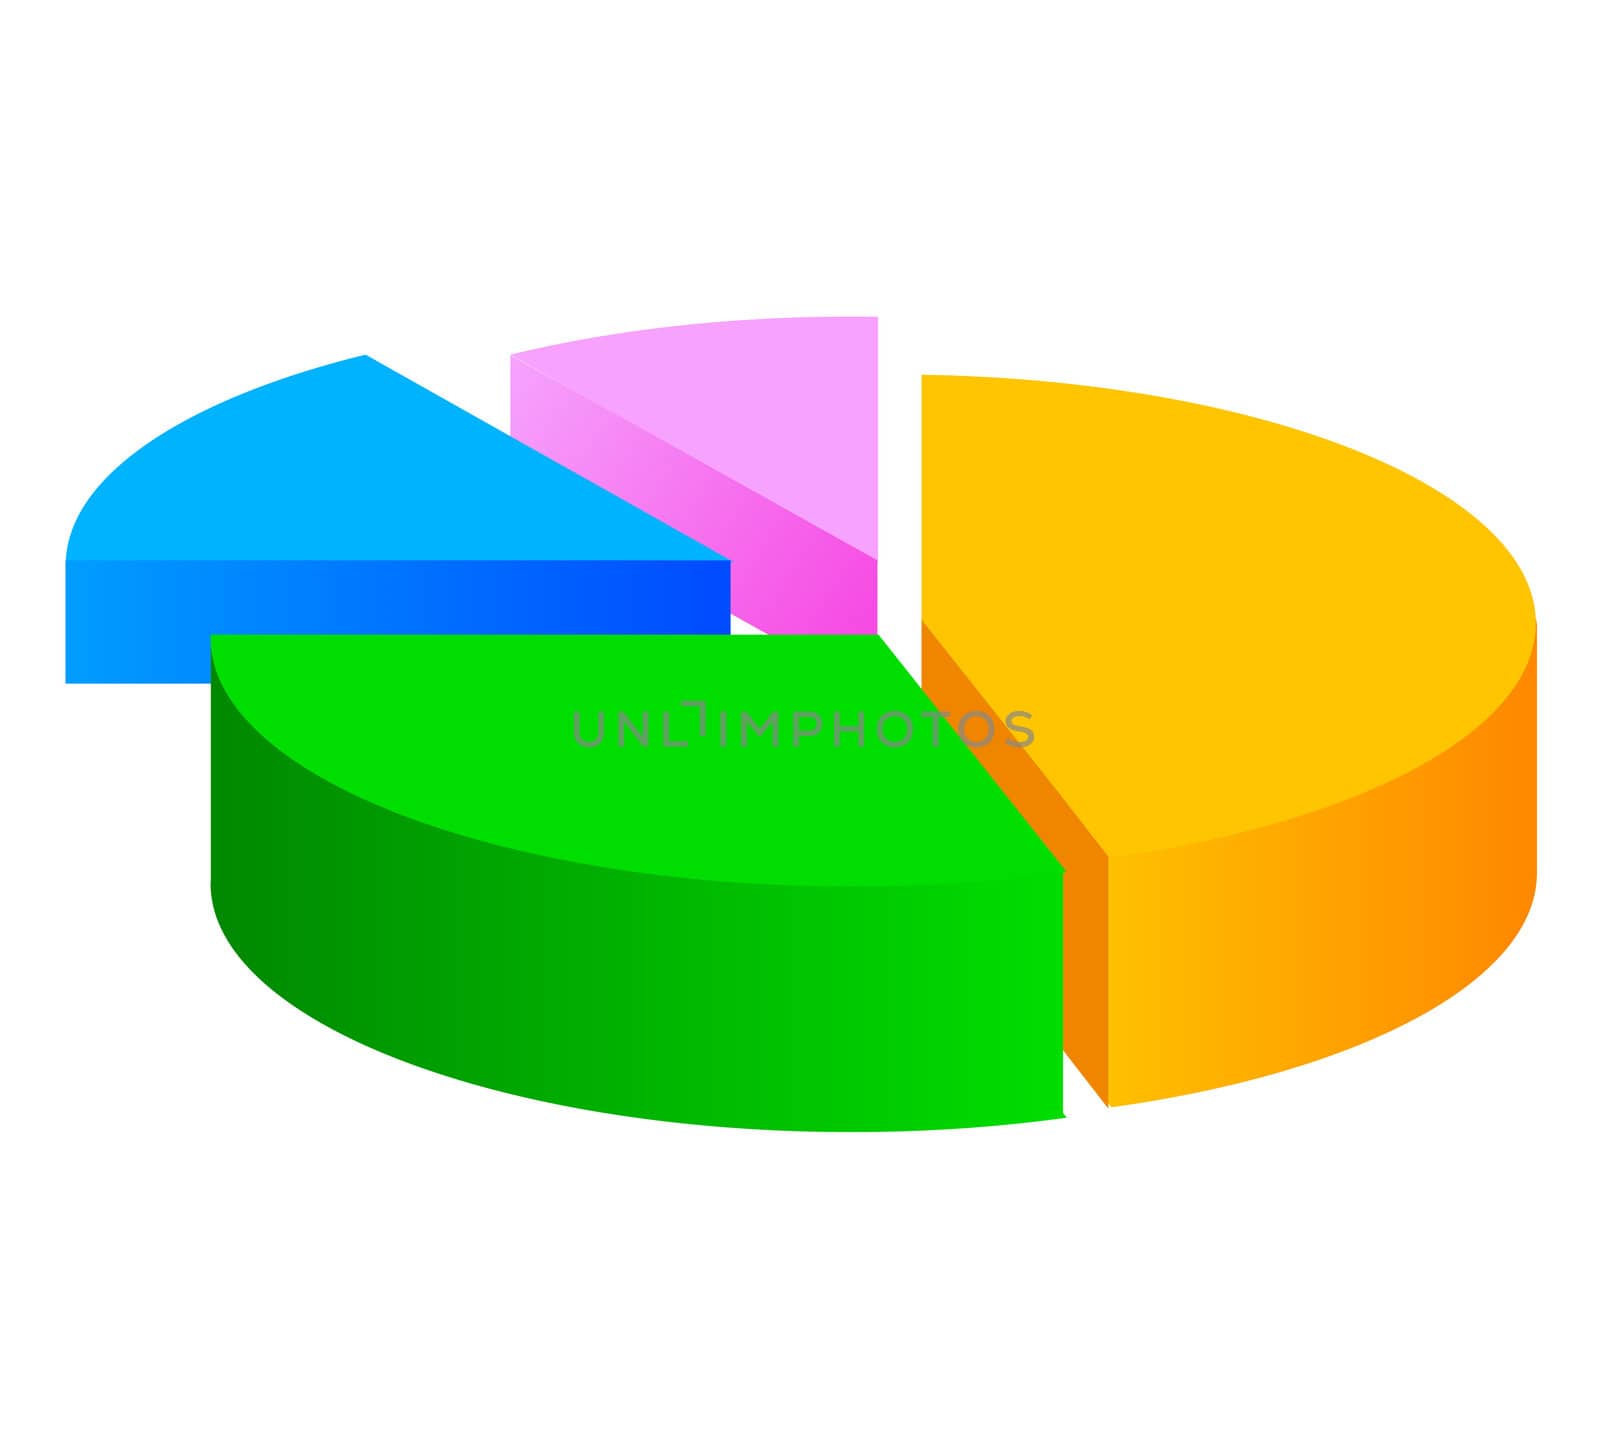 Pie chart distribution by wenbin